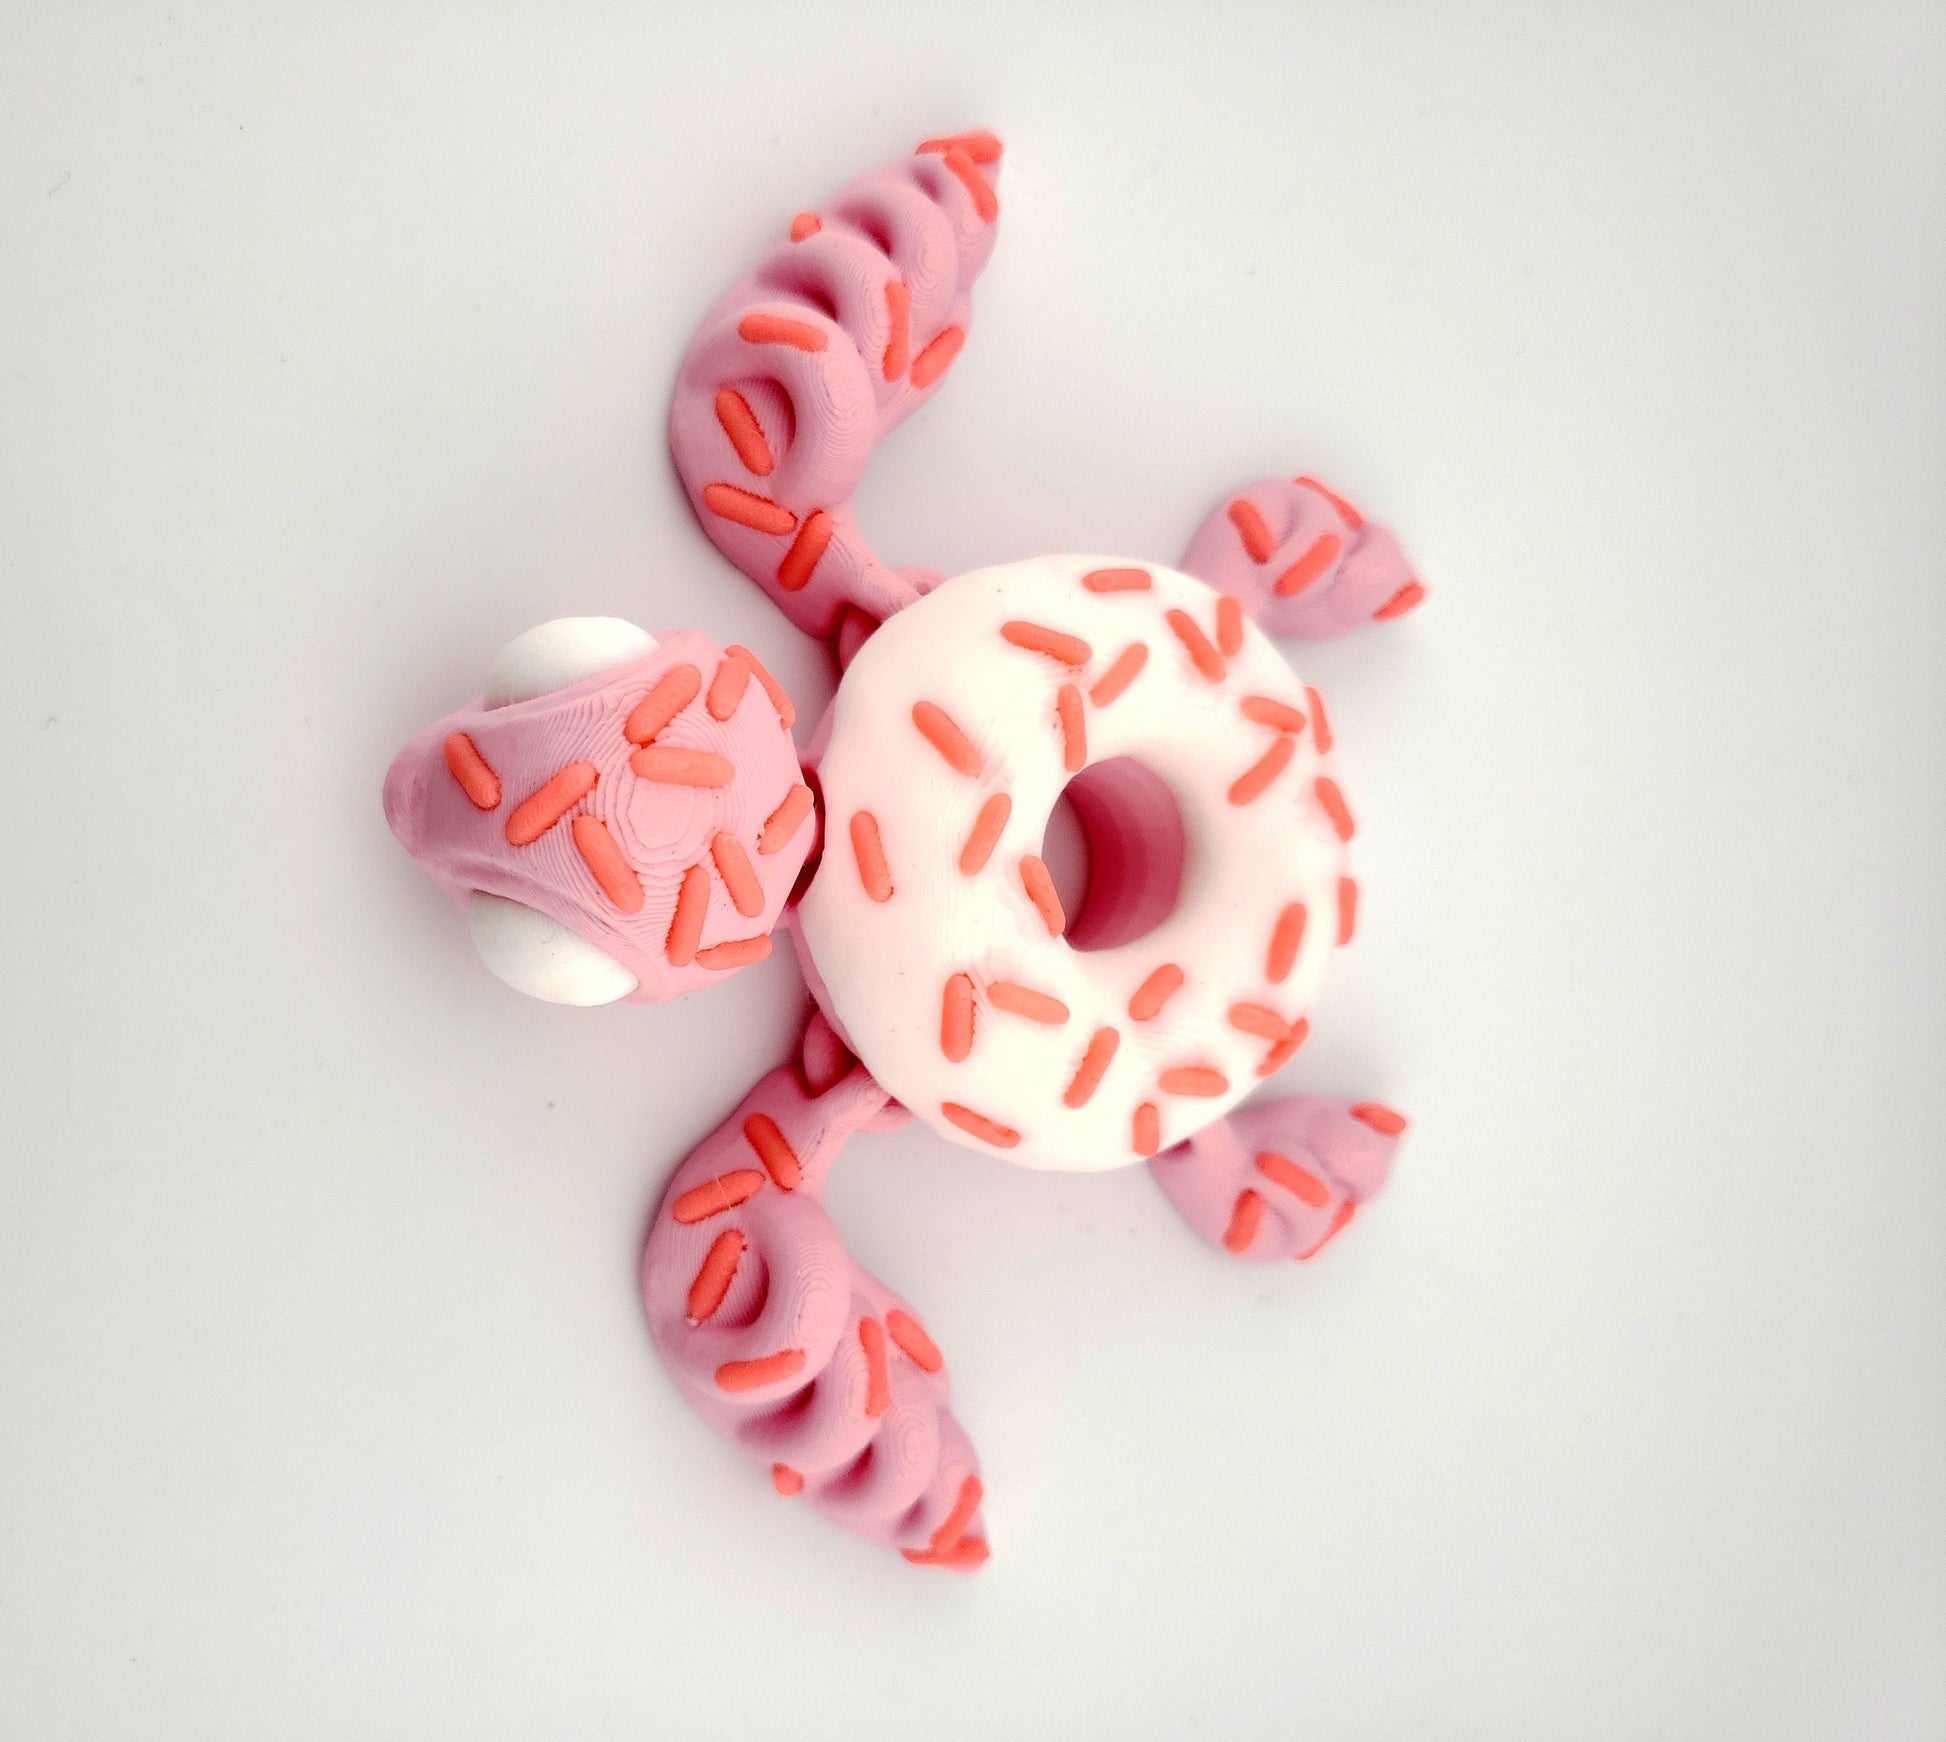 3D-Printed Articulated Donut Dessert Turtle Decor Desk Decor Fidget Toy - Animal Figurine - Authorized Seller